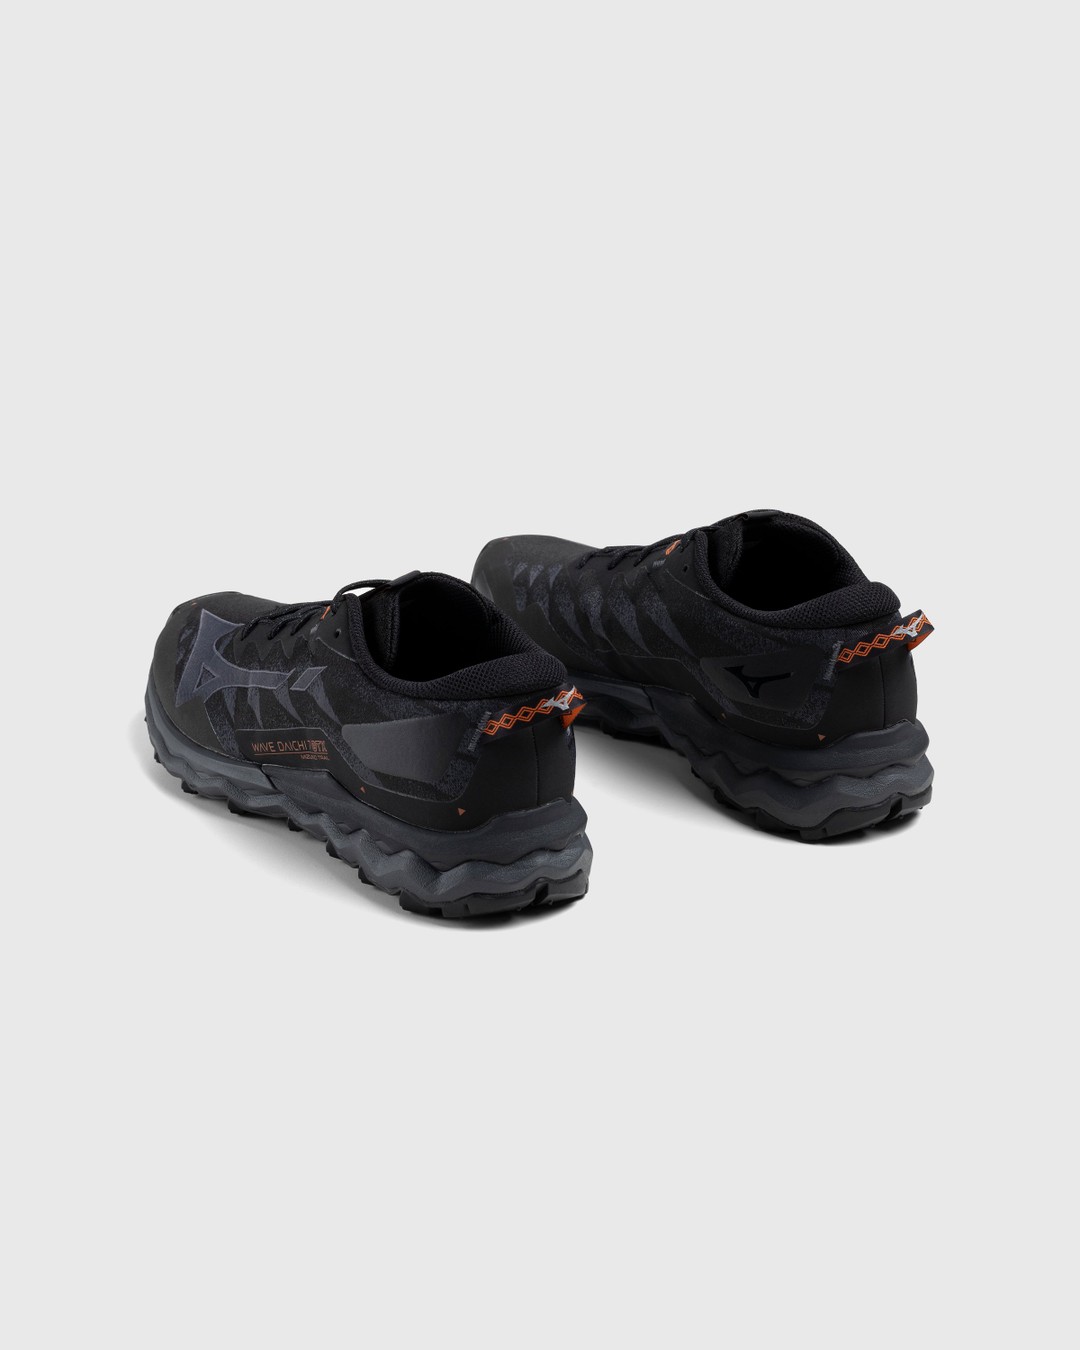 Mizuno – Wave Daichi 7 GTX Black/Iron Gate/Mecca Orange - Low Top Sneakers - Black - Image 3